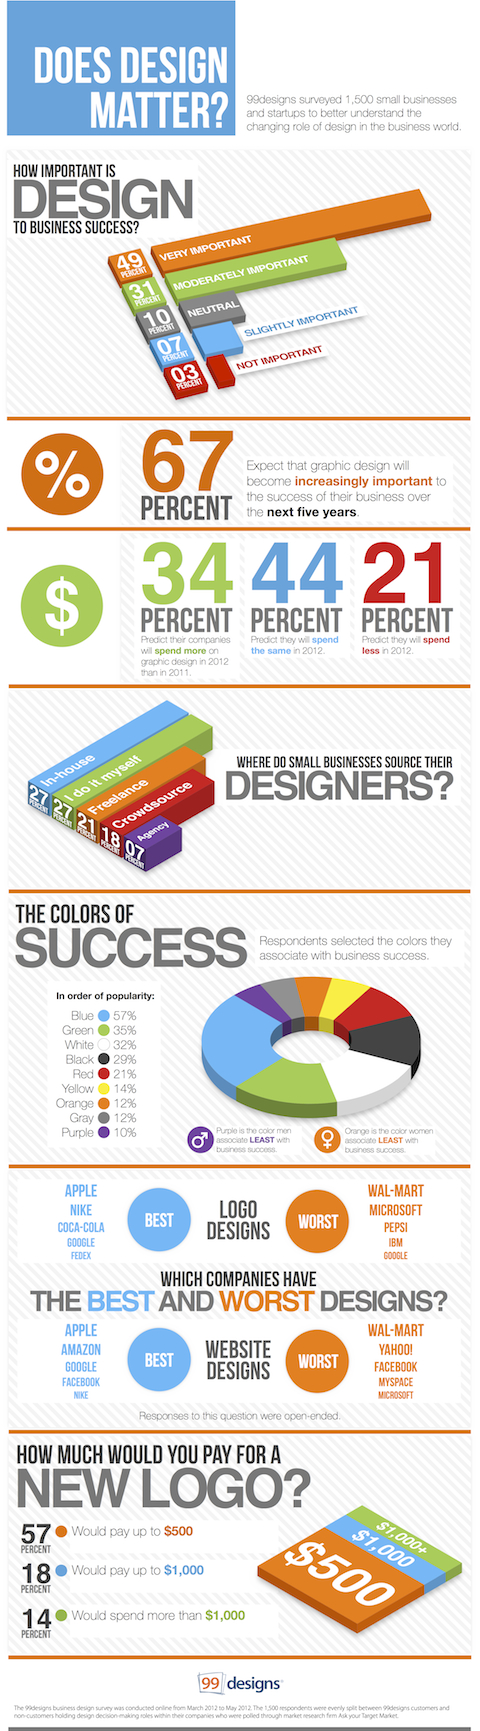 99designs-Business-Design-Survey-Infographic(1) copia